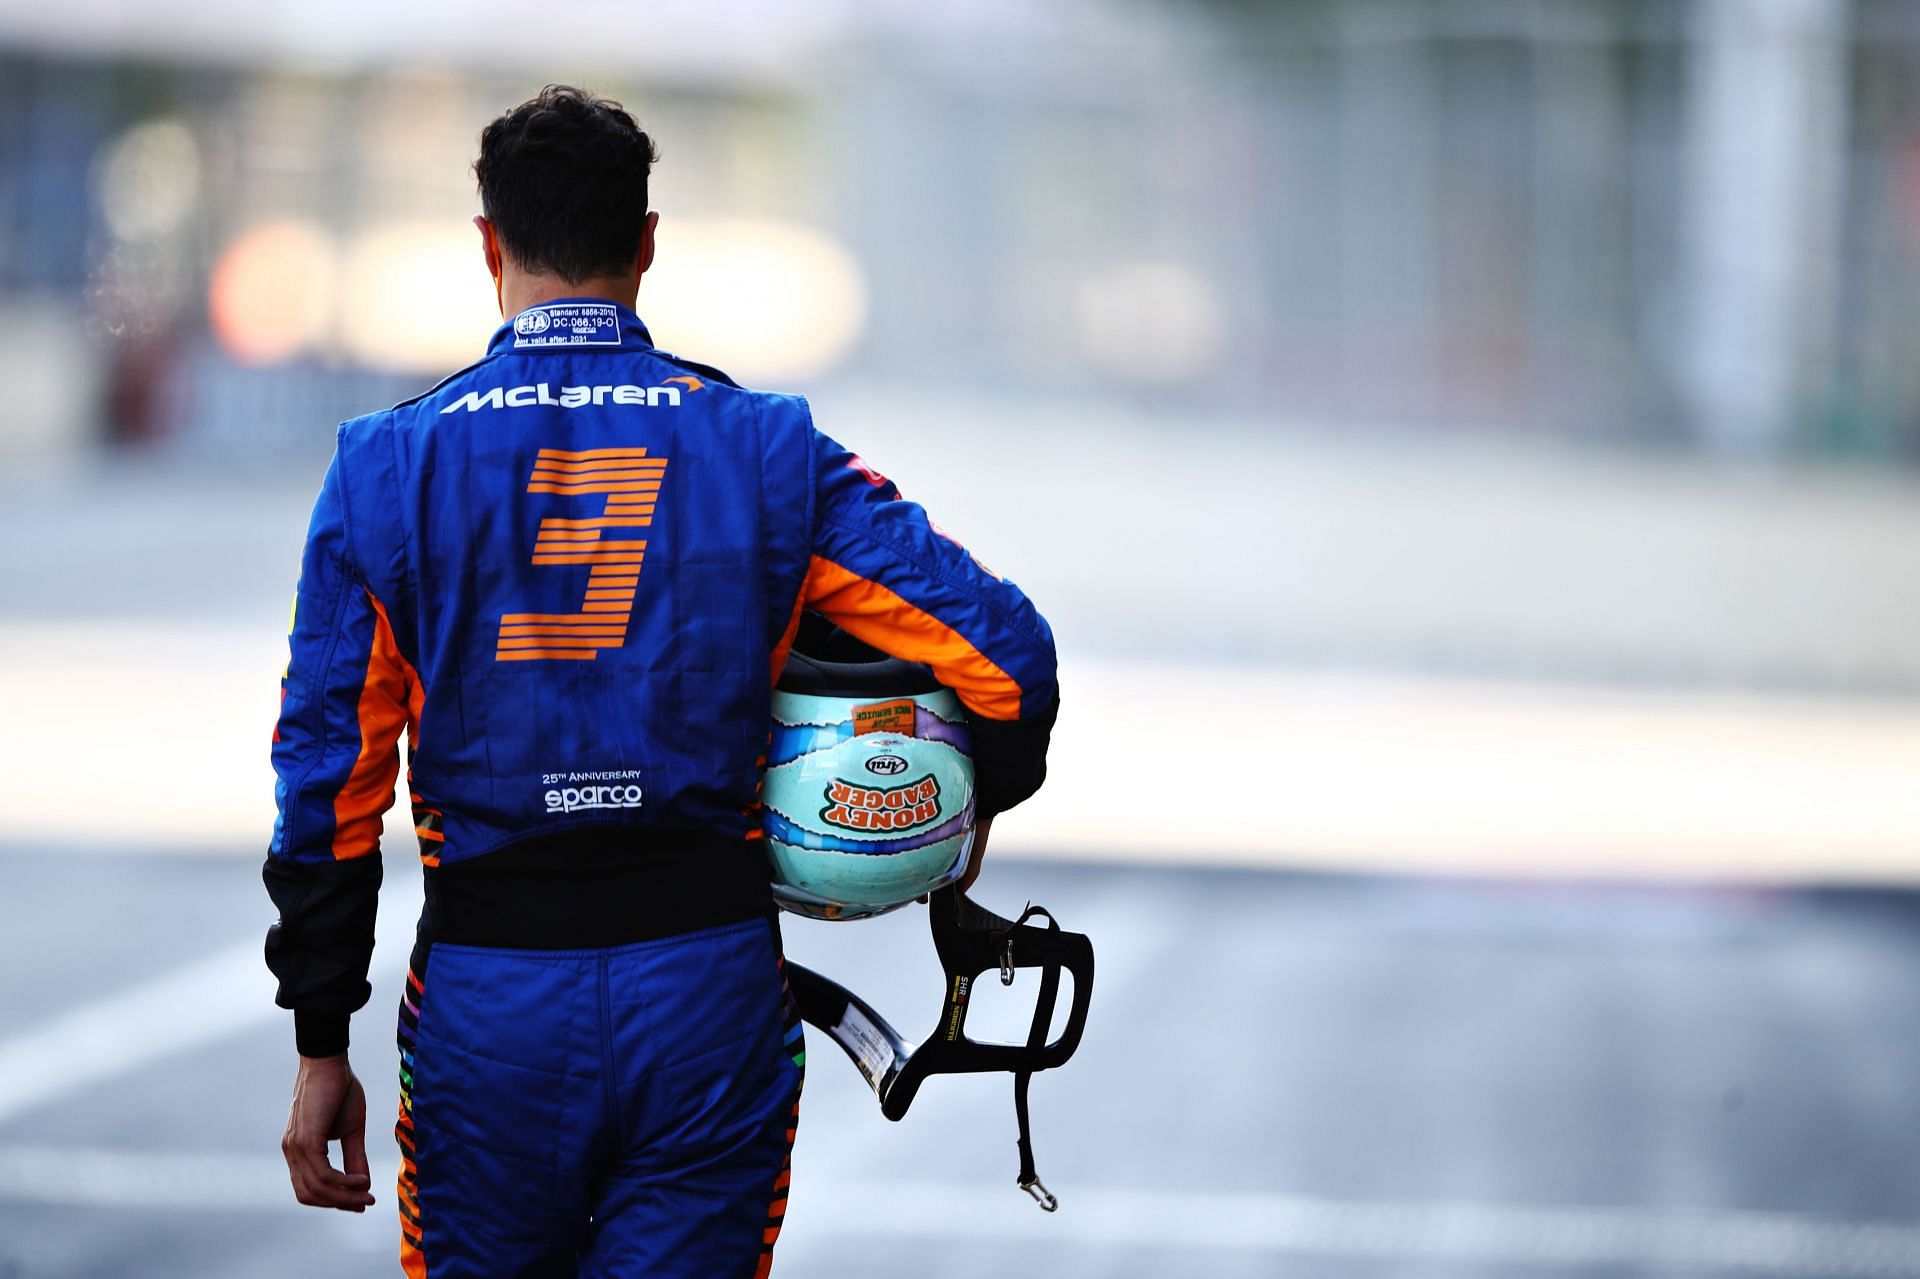 Daniel Ricciardo walks away from his car after a crash in qualifying, ahead of the 2021 Azerbaijan Grand Prix